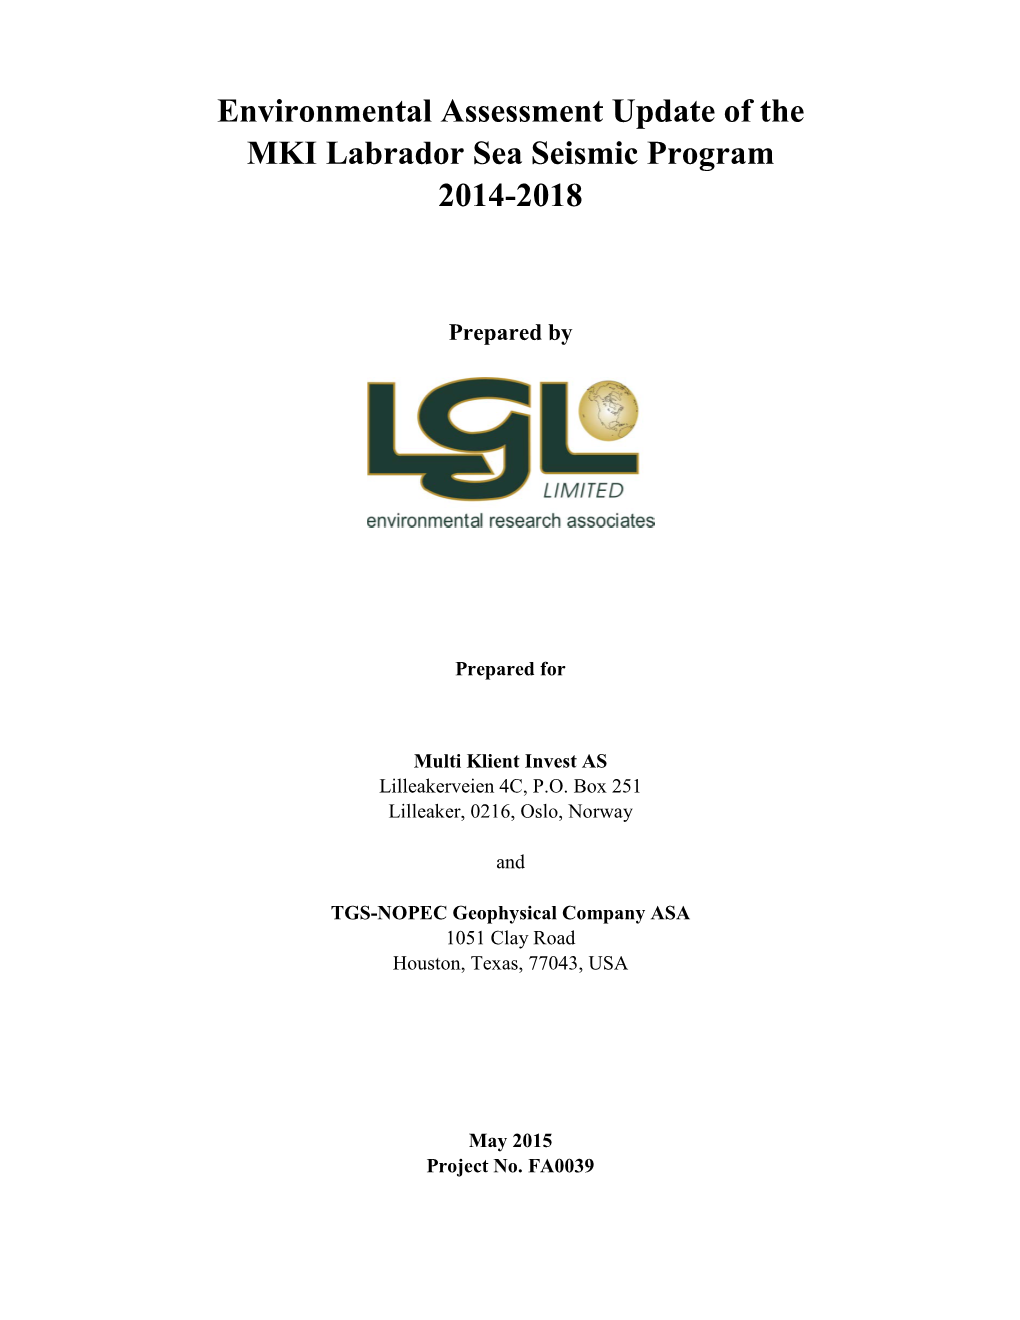 Environmental Assessment Update of the MKI Labrador Sea Seismic Program 2014-2018